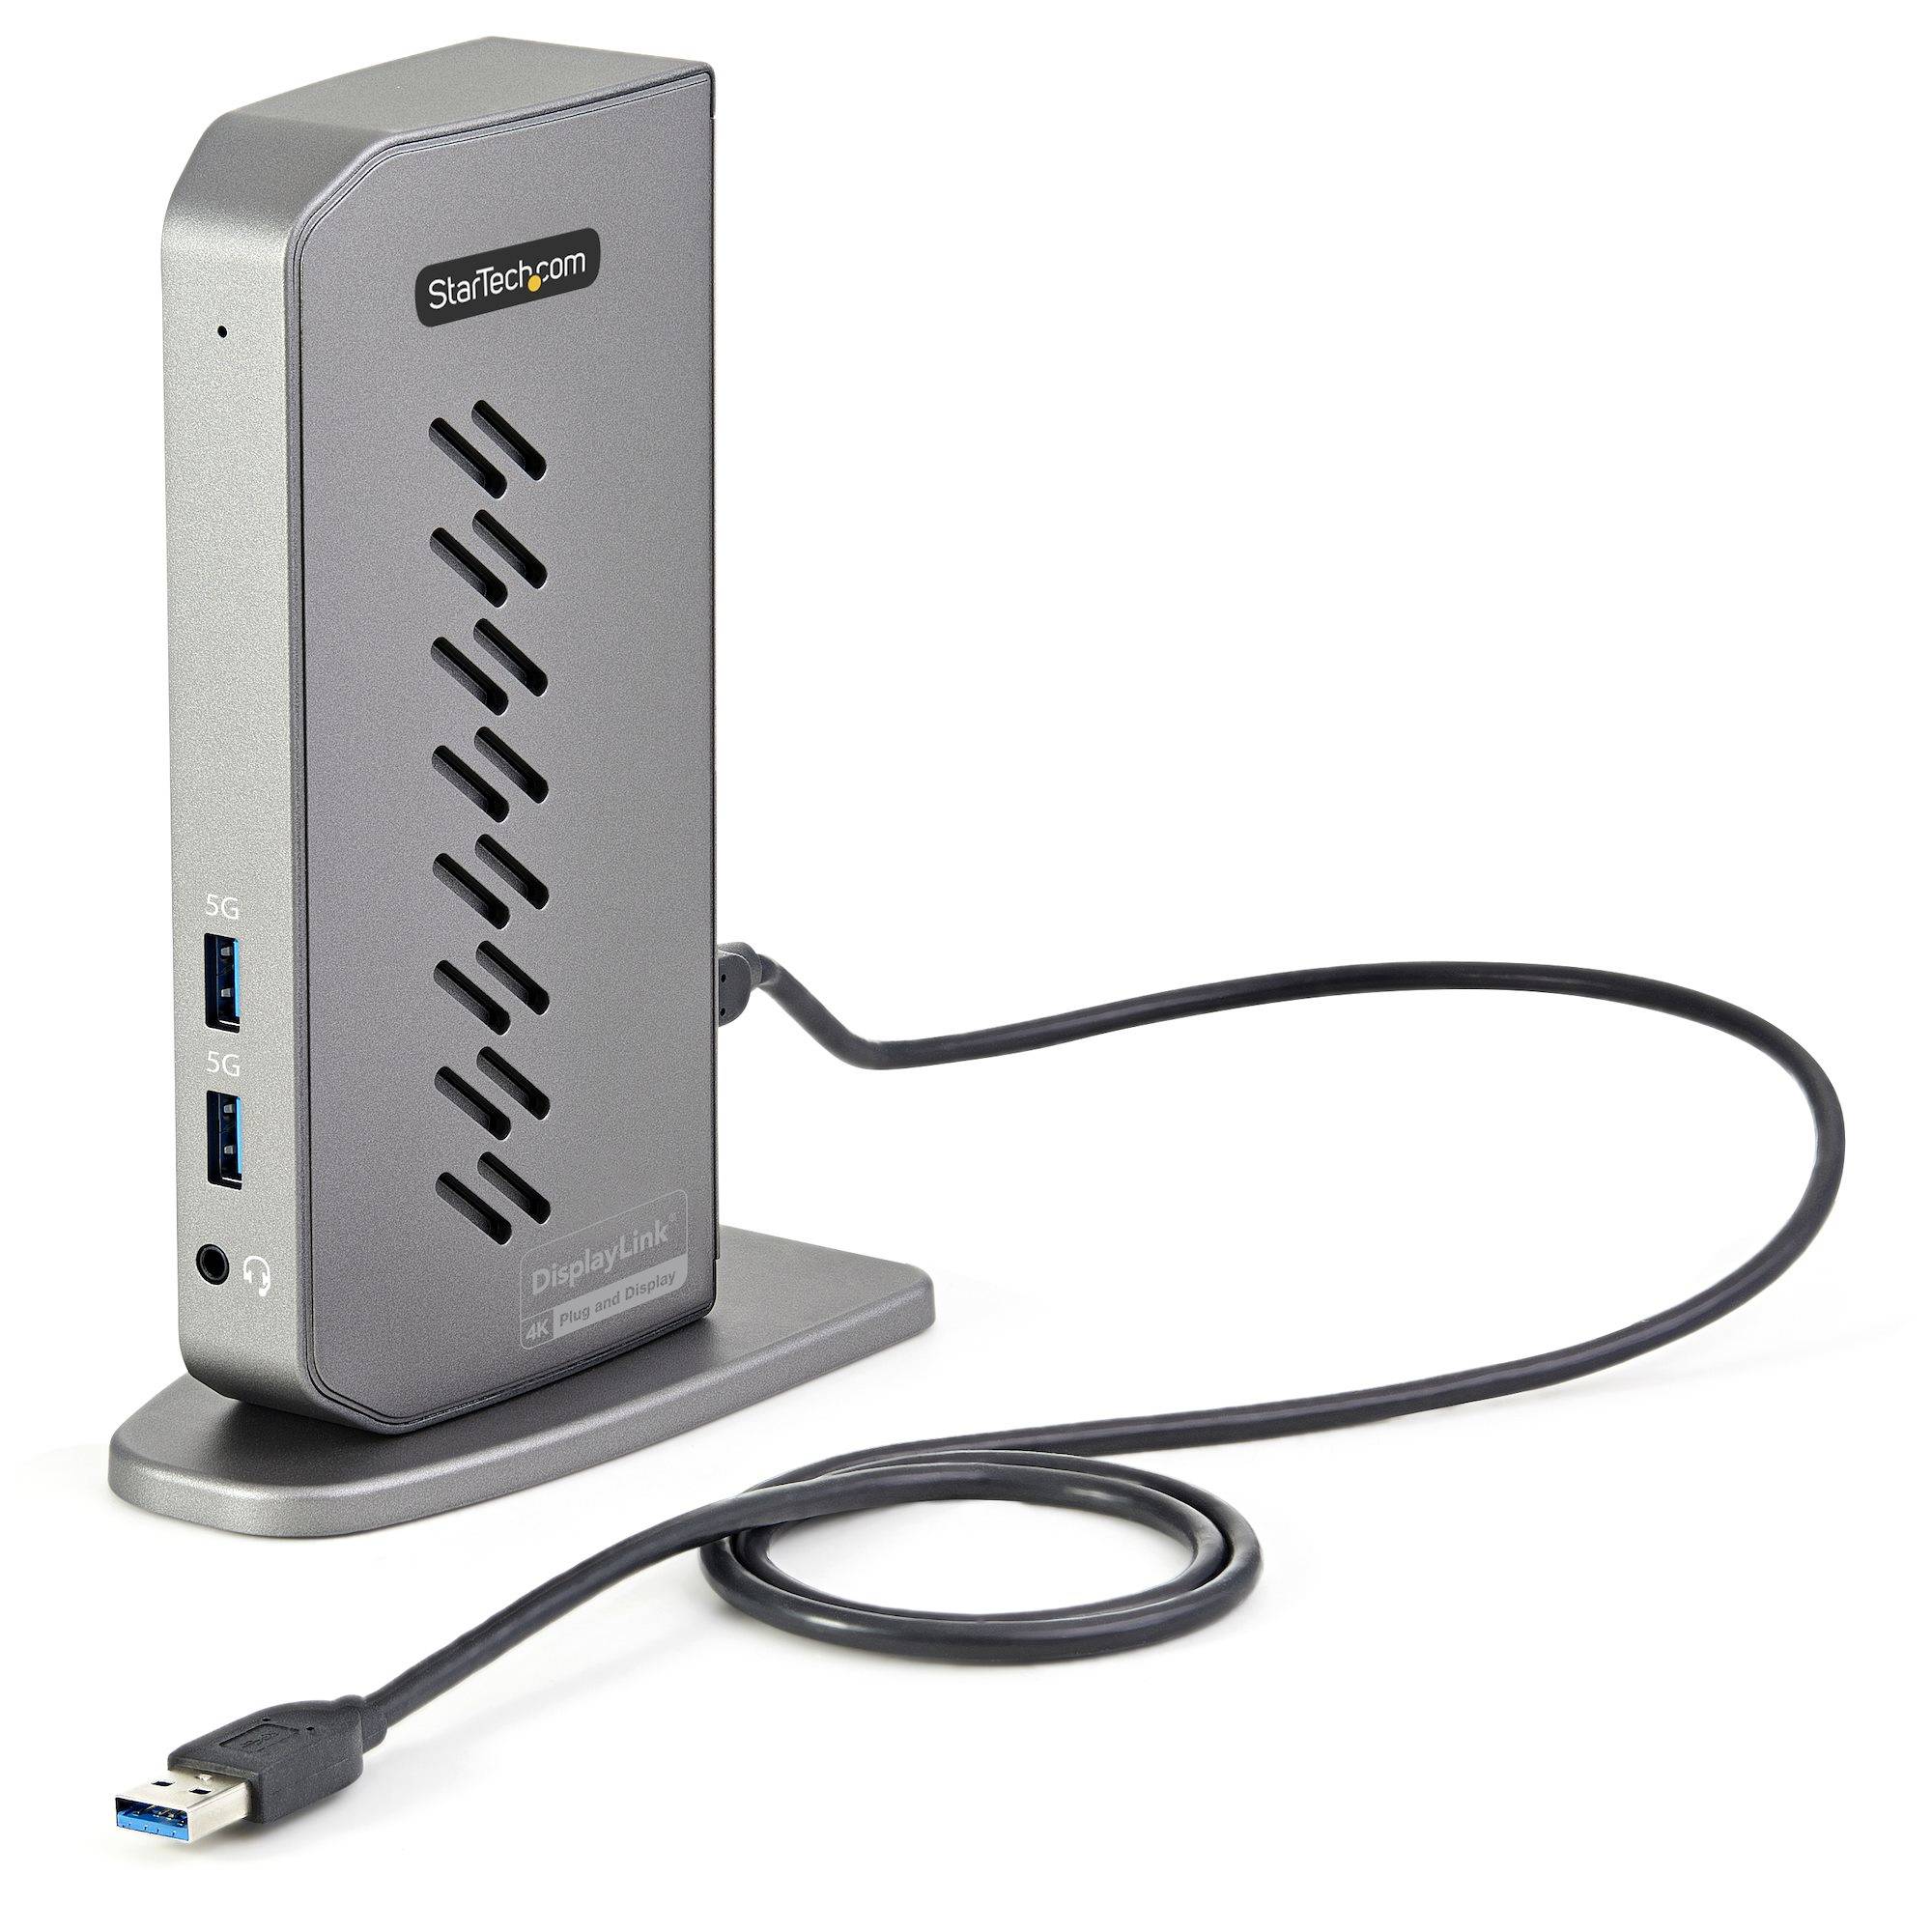 Rca Informatique - image du produit : USB-C USB-A DOCK - HYBRID USB 3.0 DOCK DUAL 4K 60HZ HDMI/DP